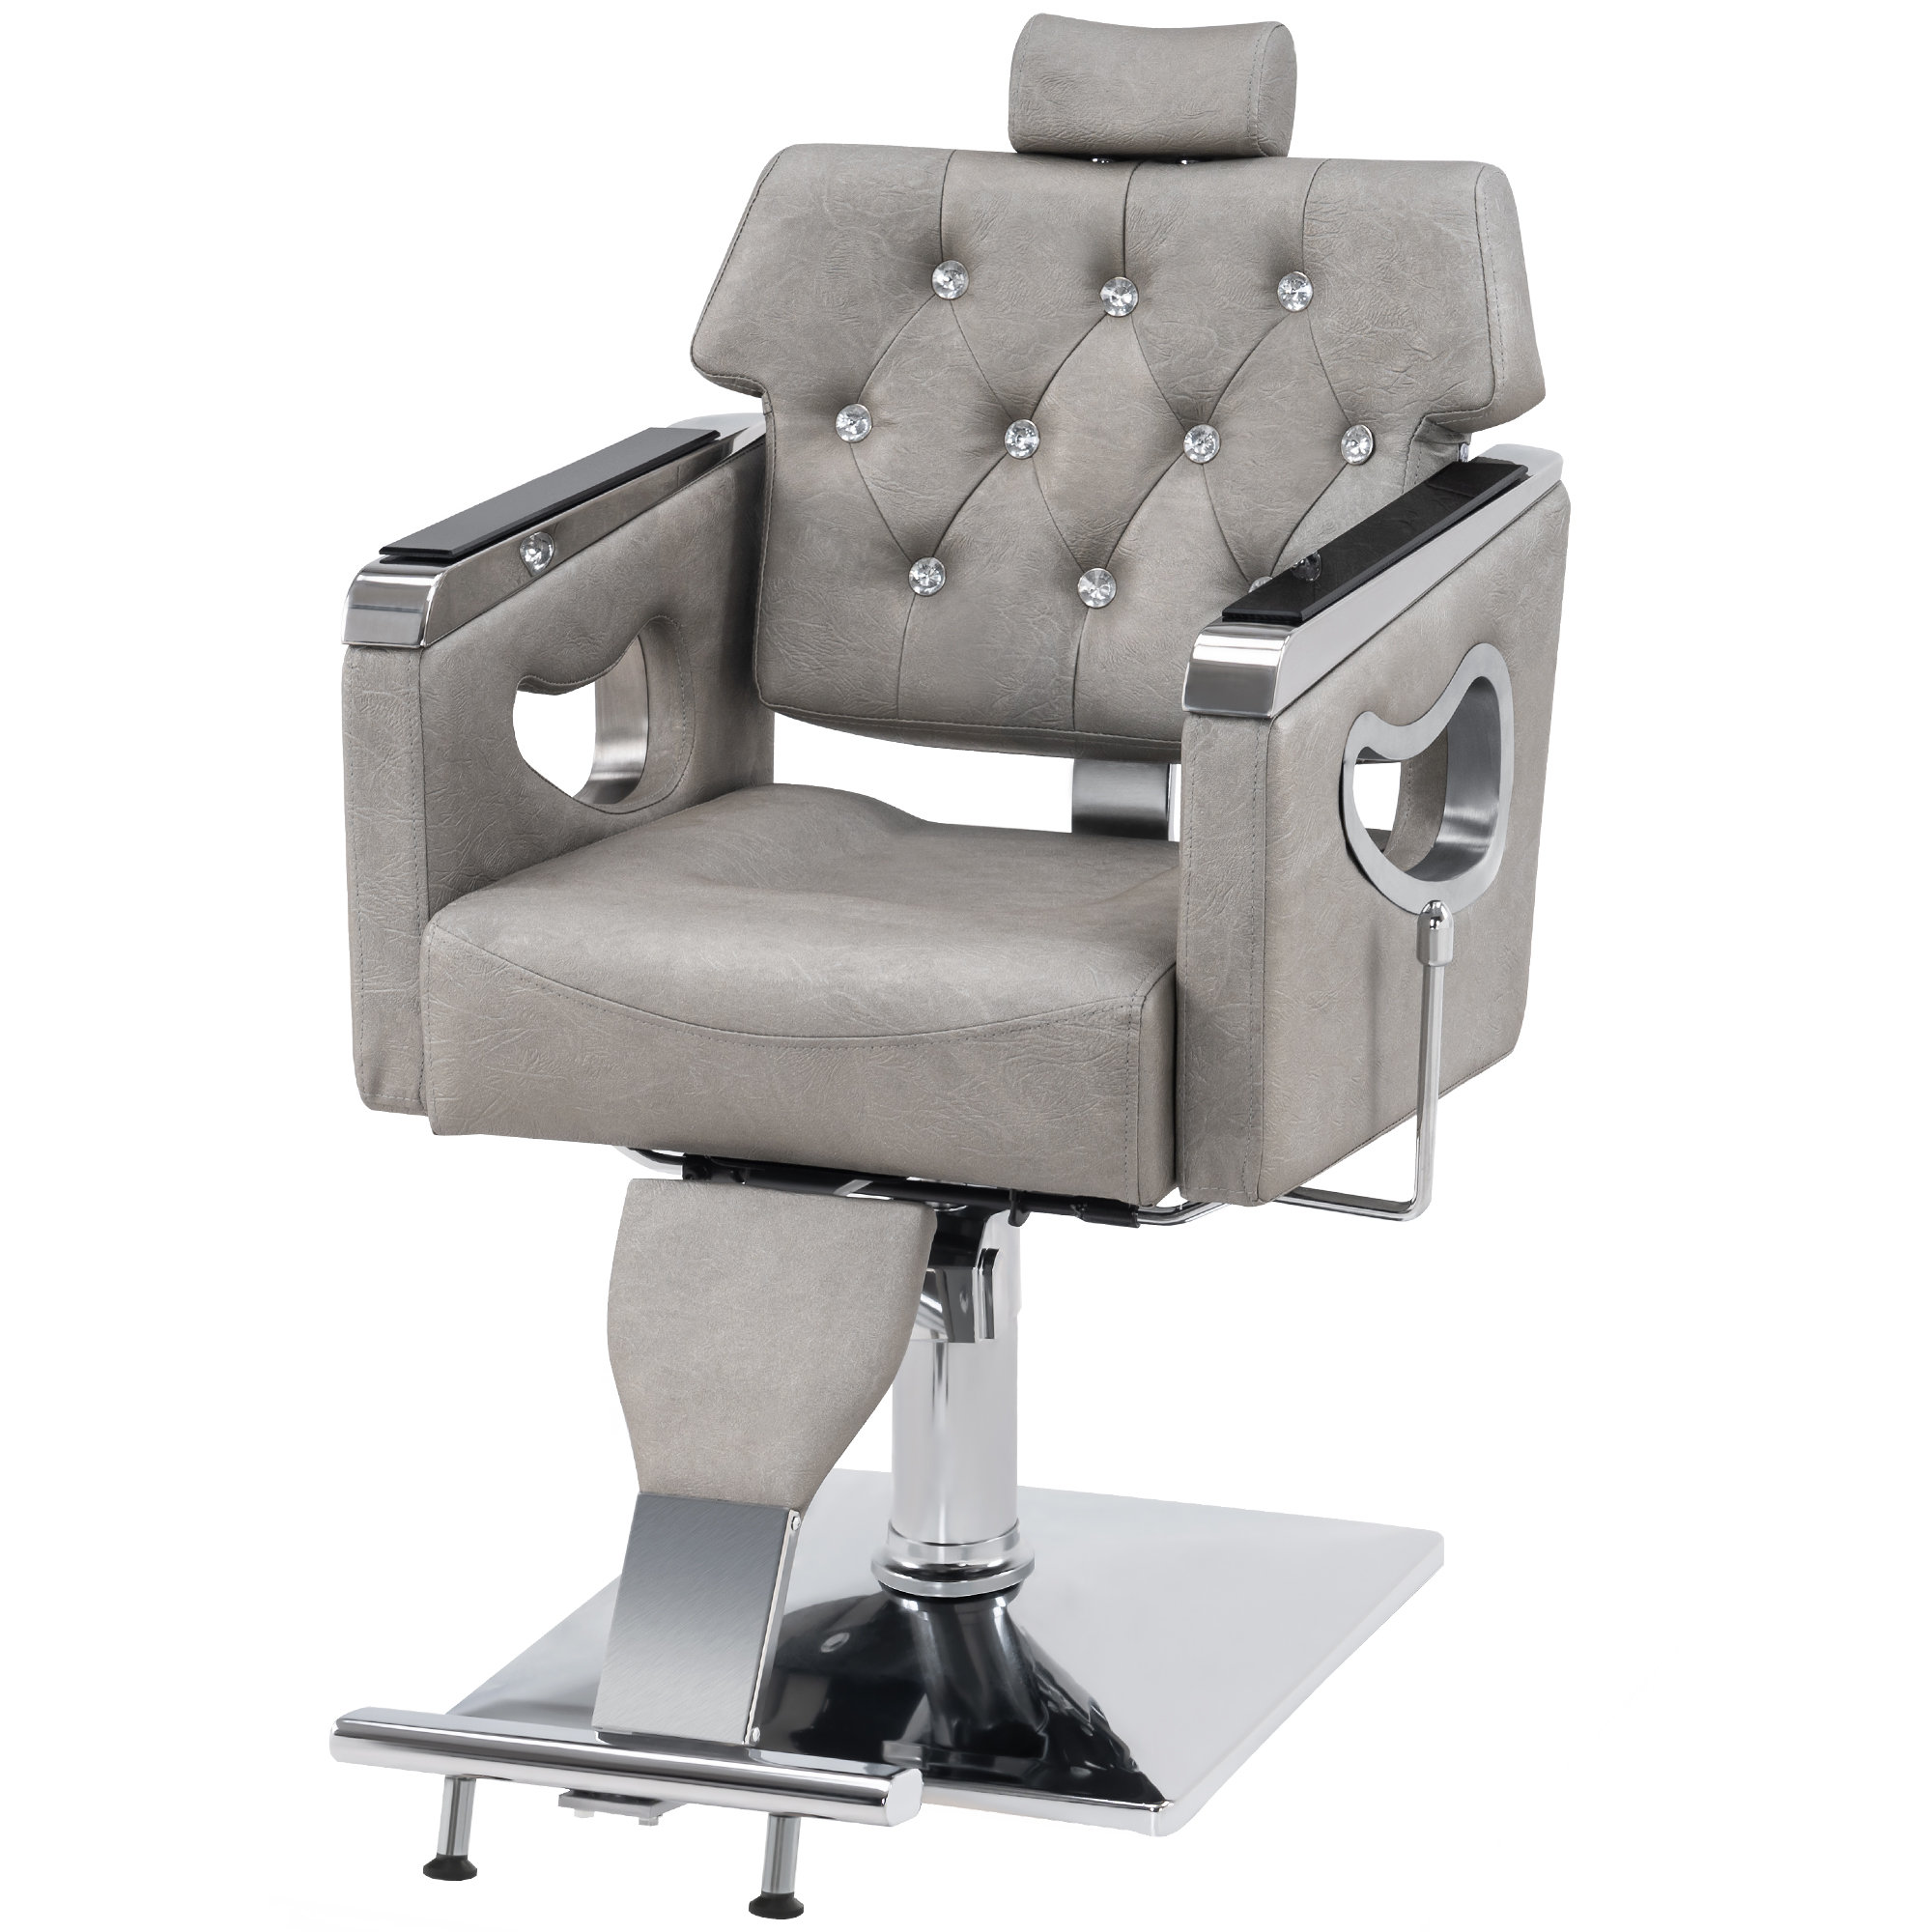 BarberPub Reclining Massage Chair with Ottoman Orren Ellis Body Fabric: Gray Faux Leather